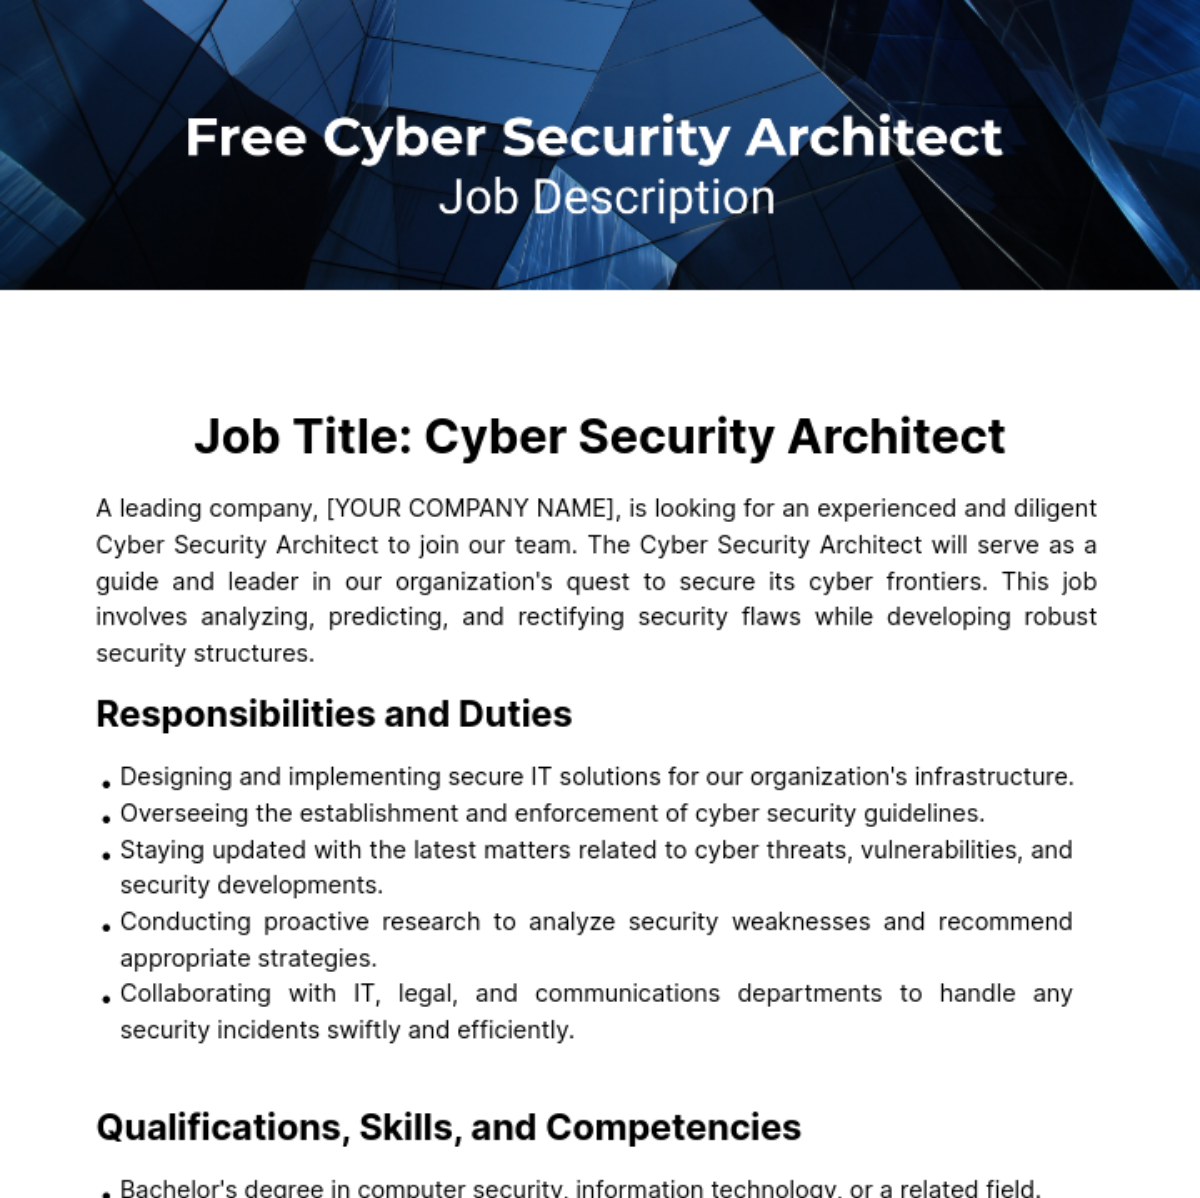 Free Cyber Security Architect Job Description Template